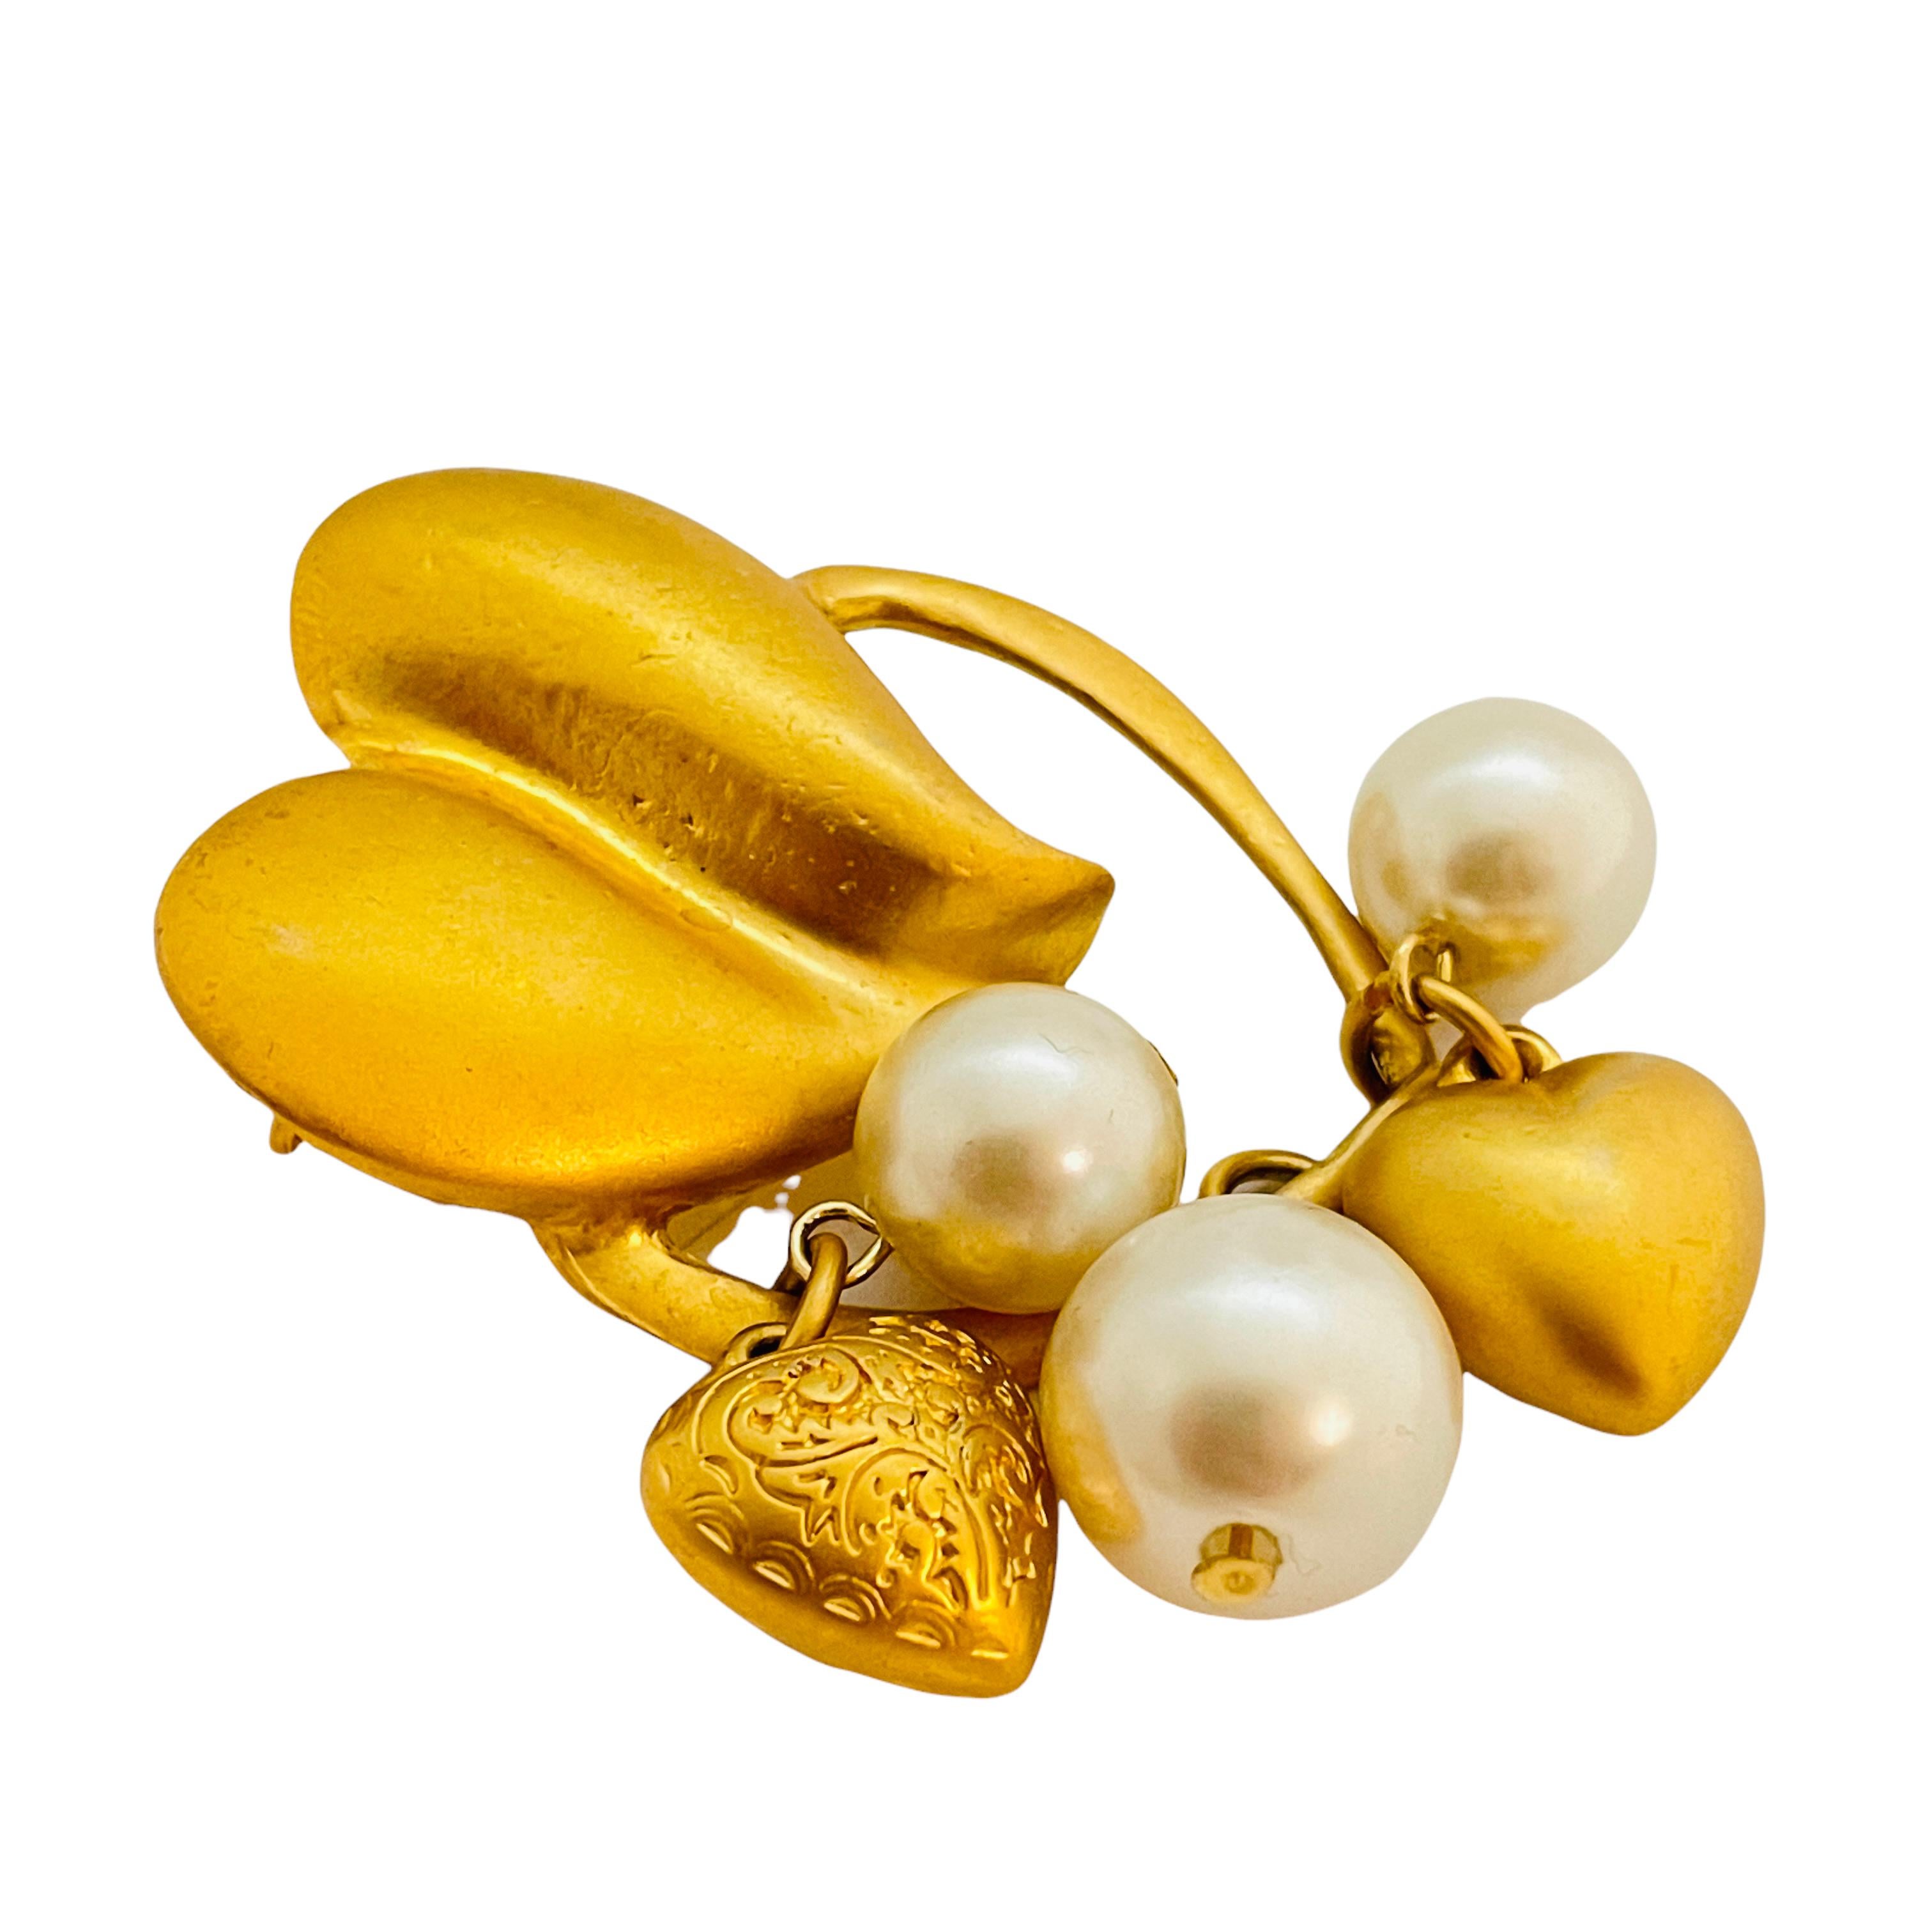 DETAILS

• unsigned

• gold tone with pearls

• vintage designer runway brooch

MEASUREMENTS

• 2.68